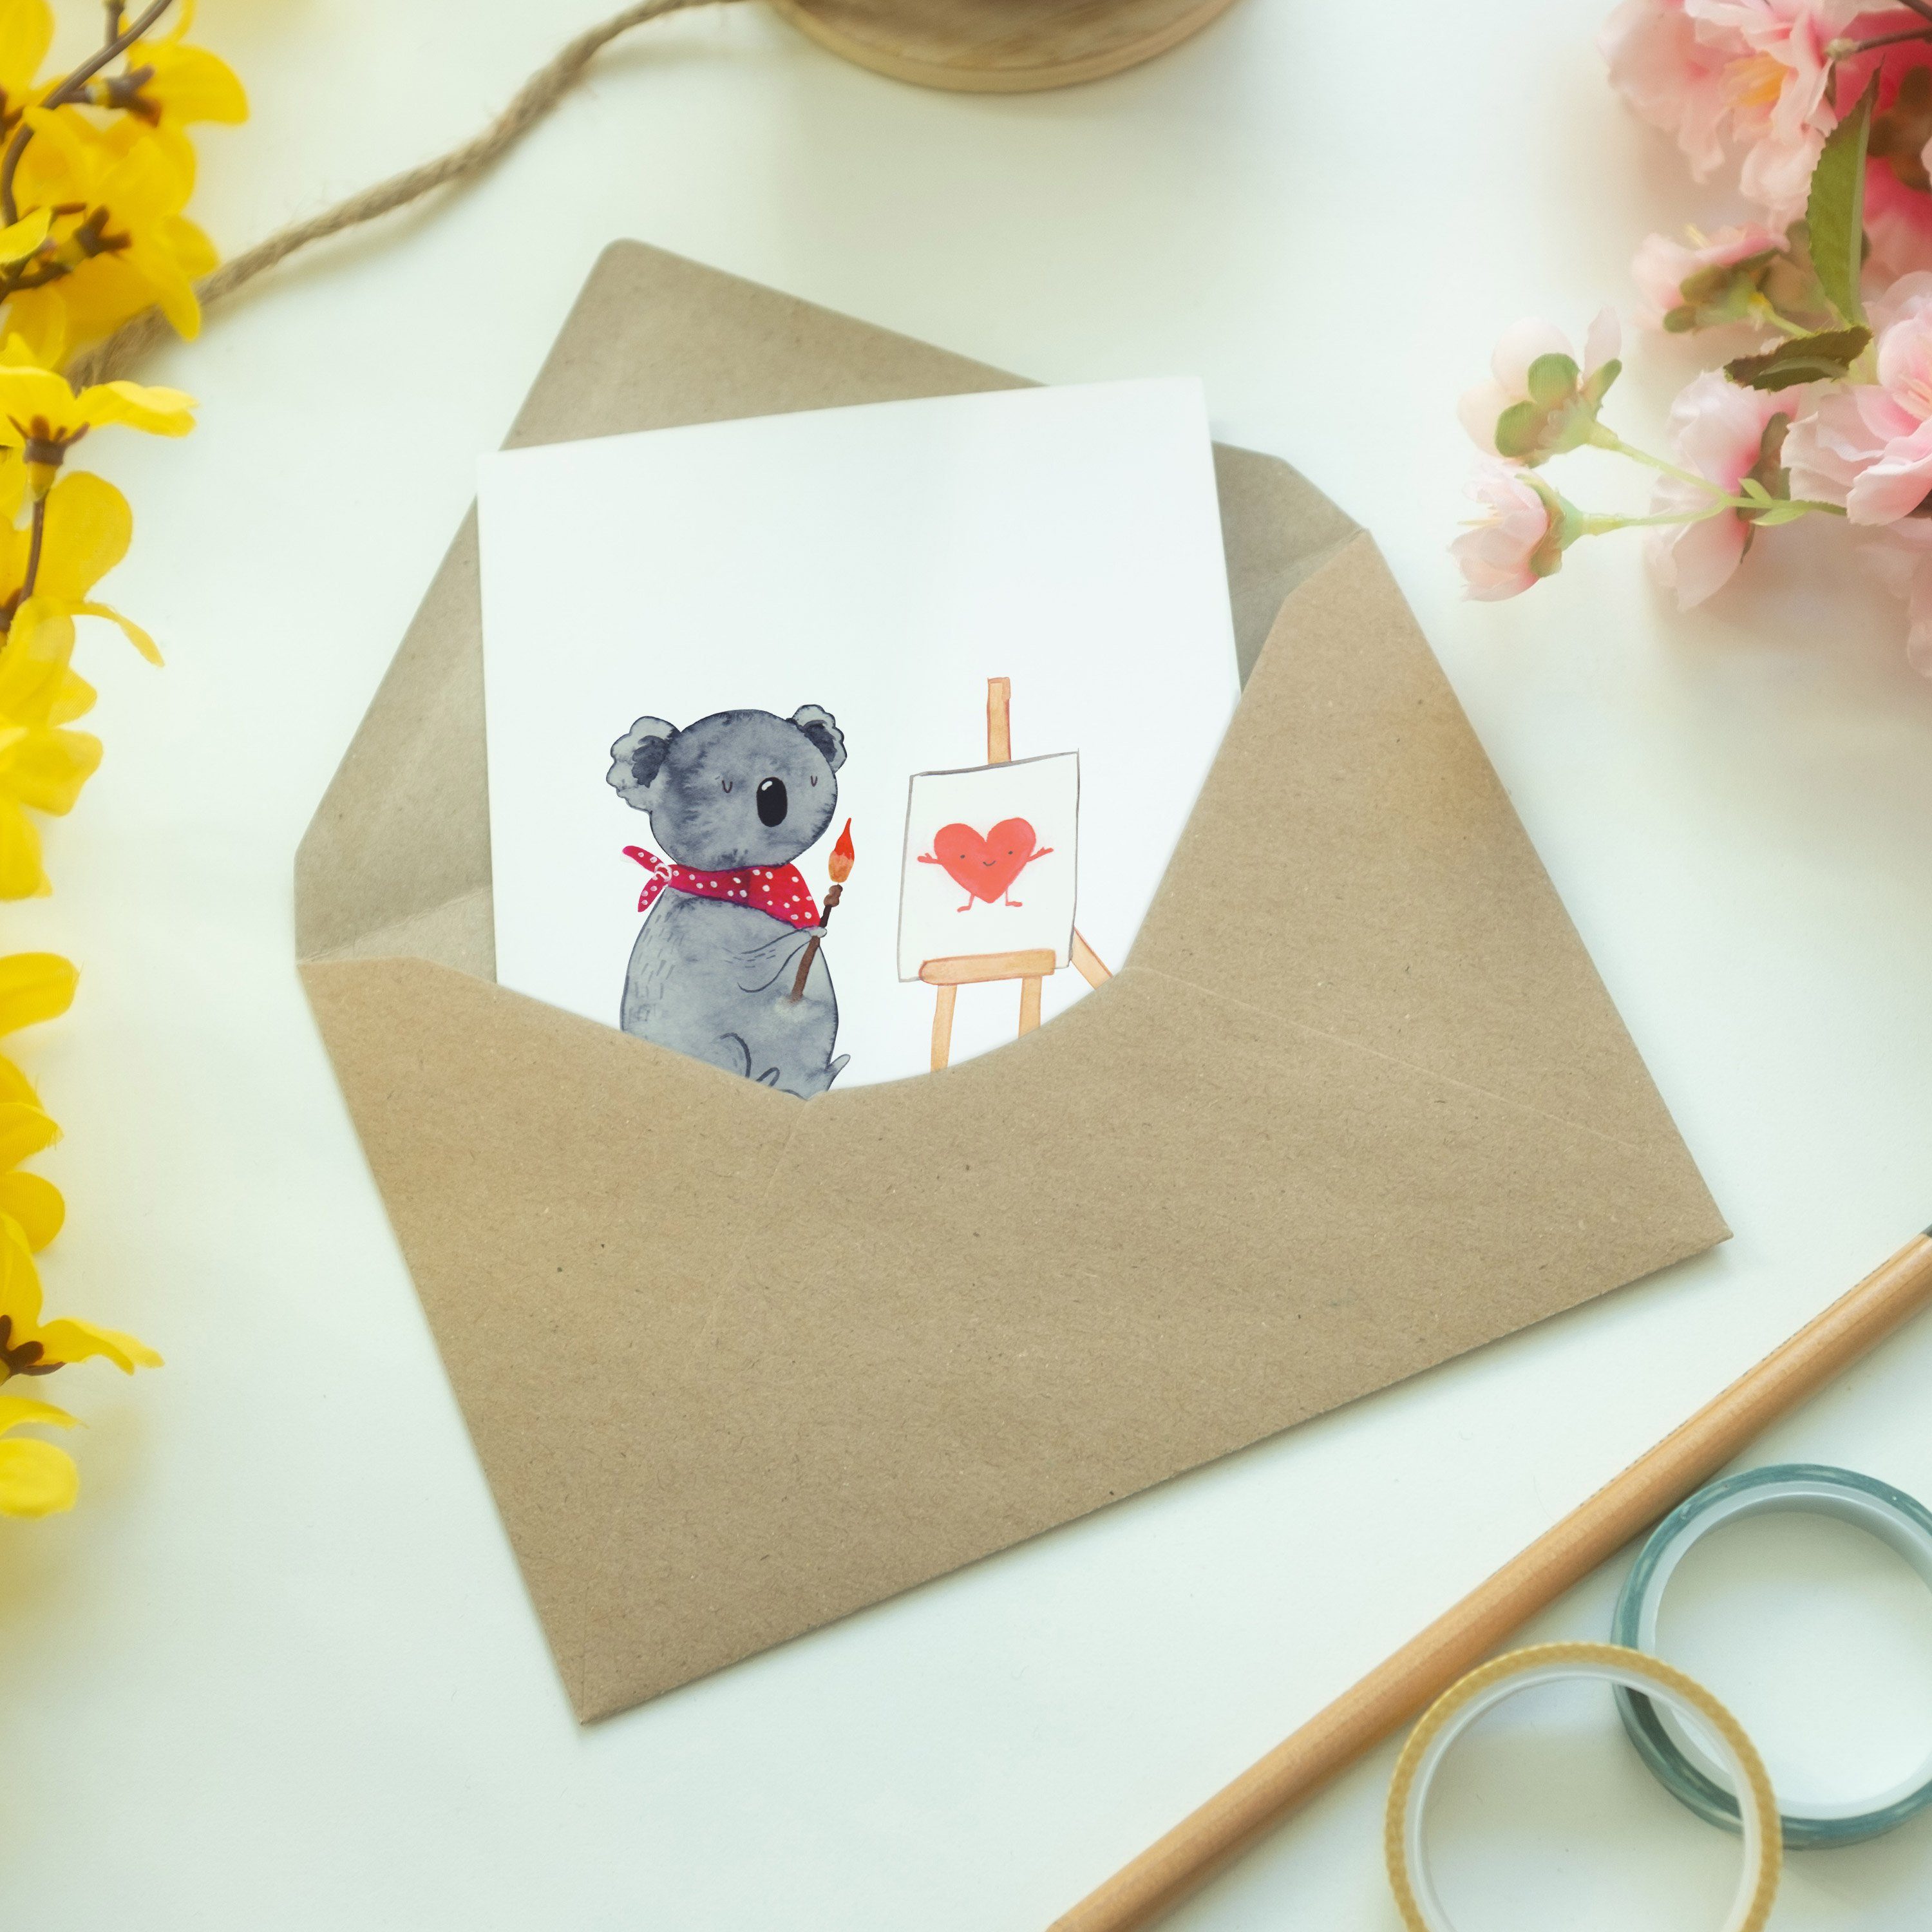 Koala - Künstler - Geschenk, Weiß Mrs. & Klappkarte, Karte, Panda Grußkarte Liebe, Mr. Gefühle